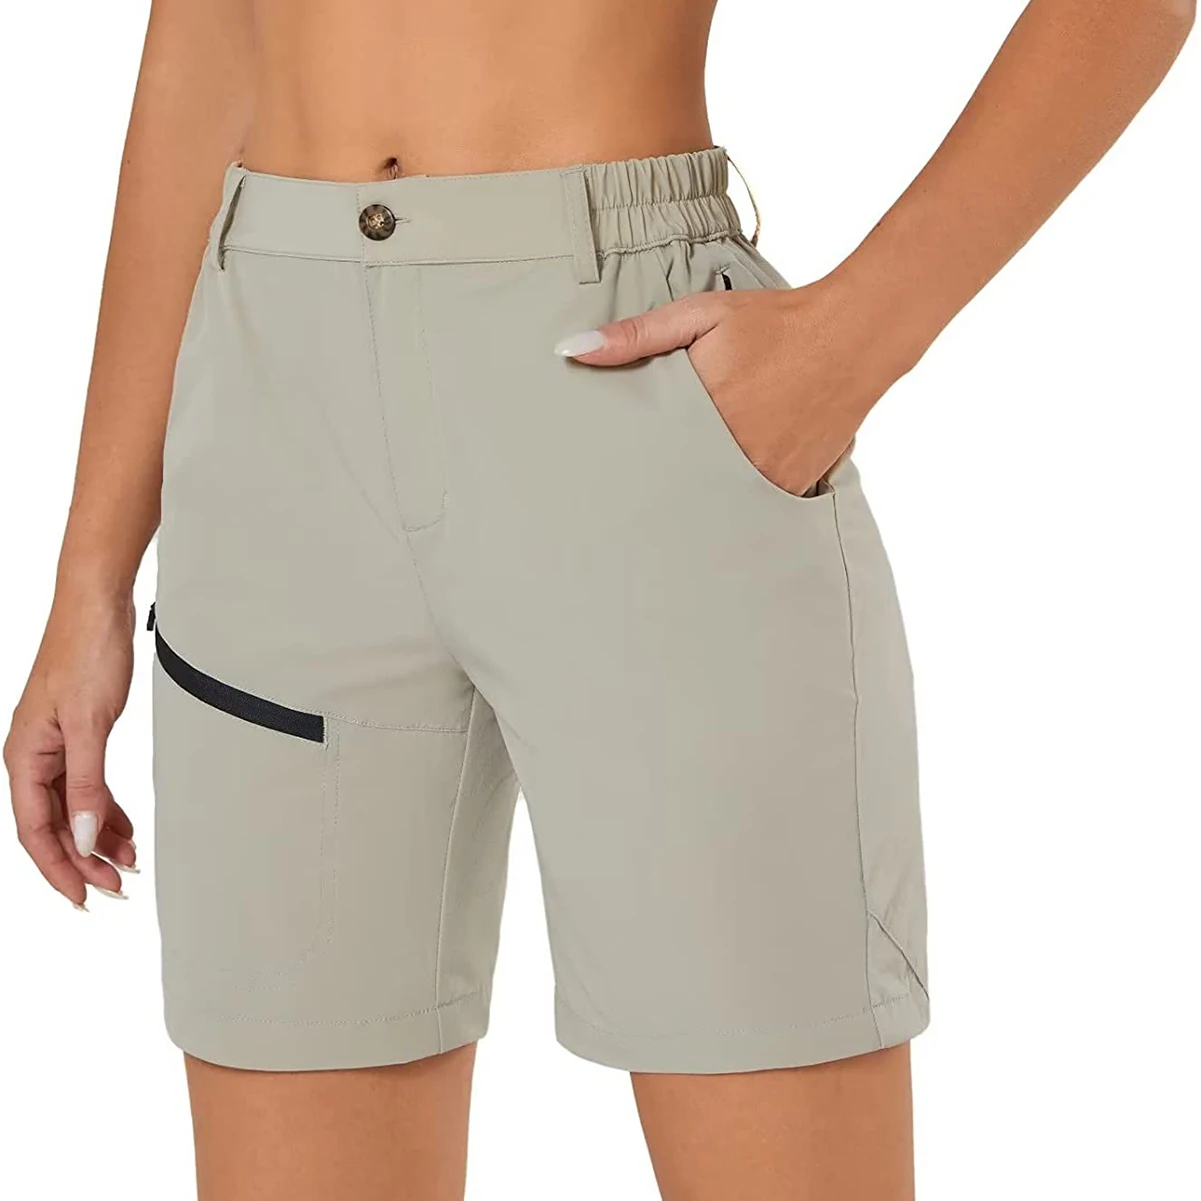 Women's fishing Shorts Quick Dry Waterproof Travel Shorts. - Easy Fishing  Tackle